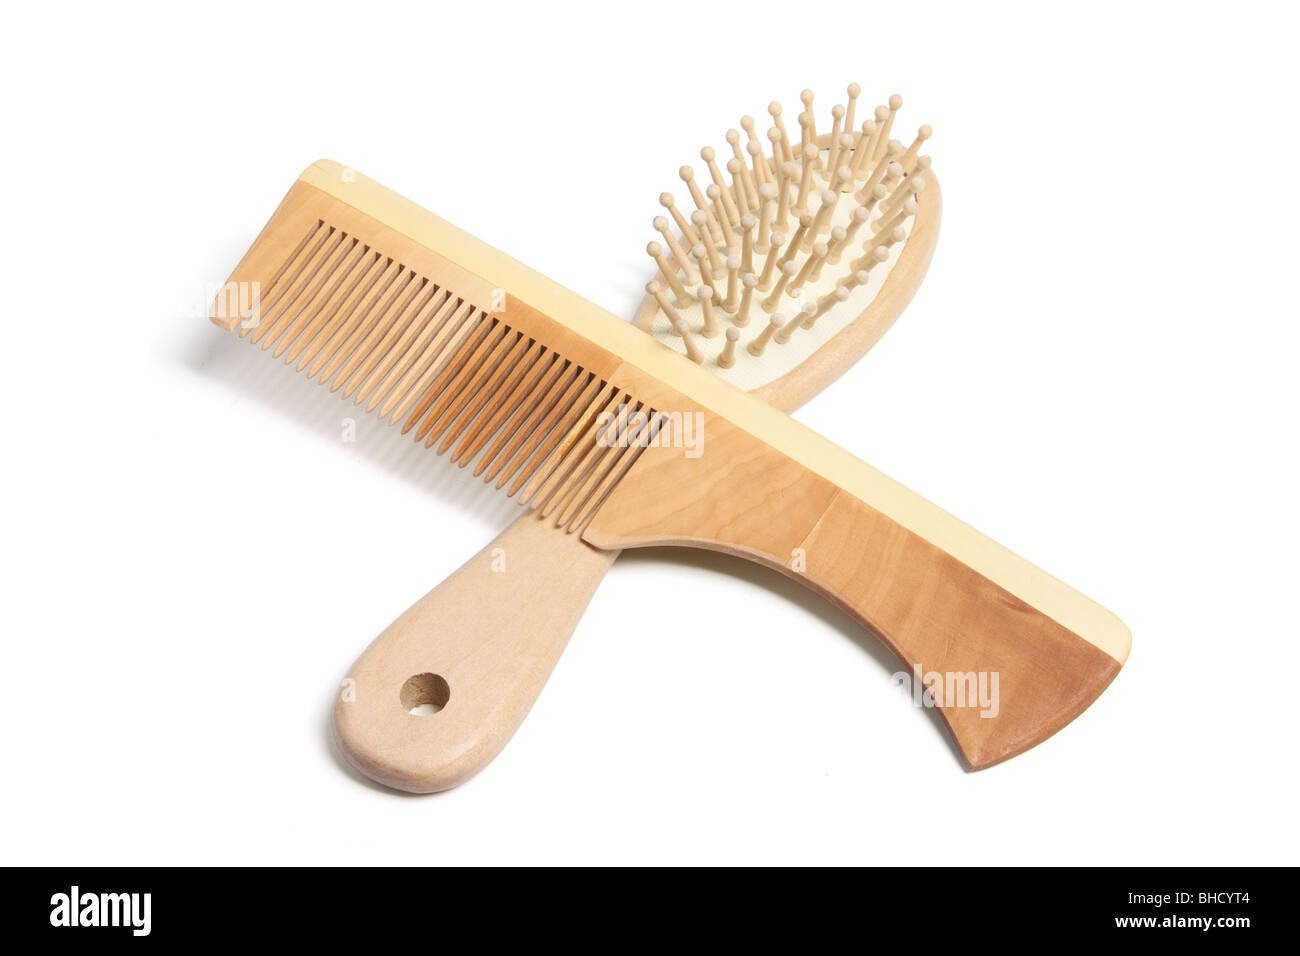 Comb and Hairbrush Stock Photo